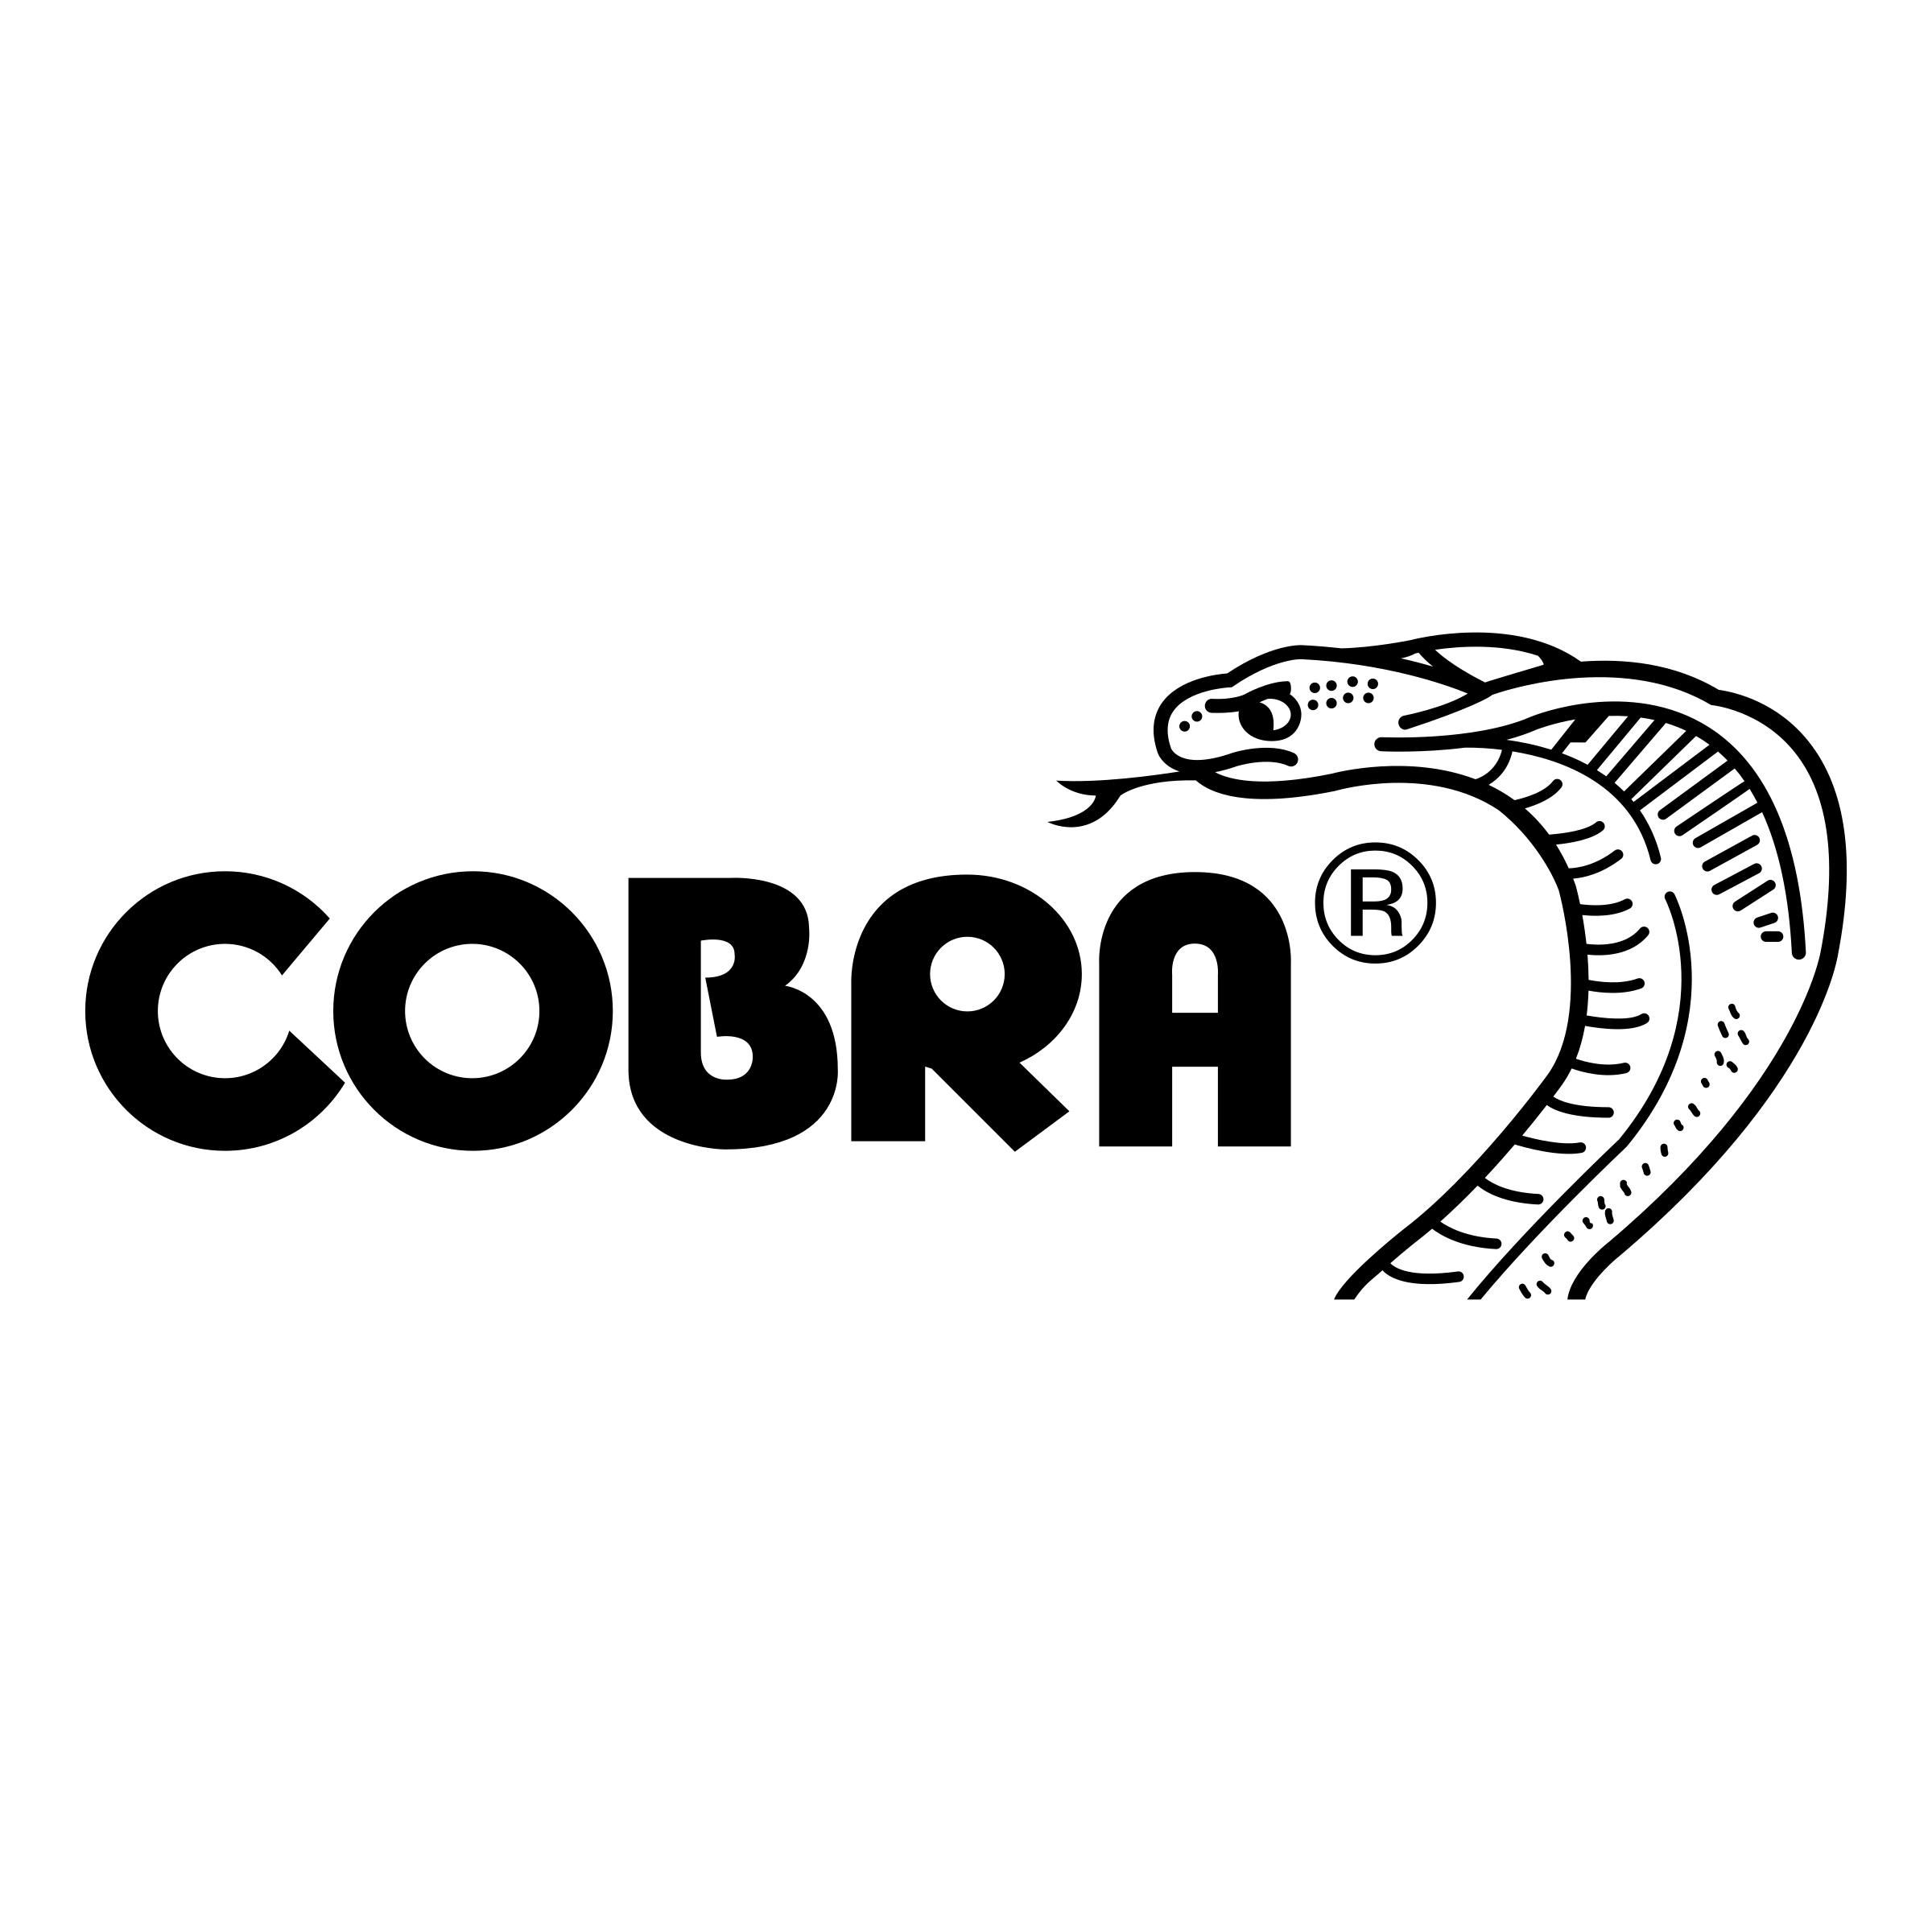 Cobra перевод. Cobra лого. Э́мблема Кобра. Cobra надпись. Эмблема крючков Кобра.